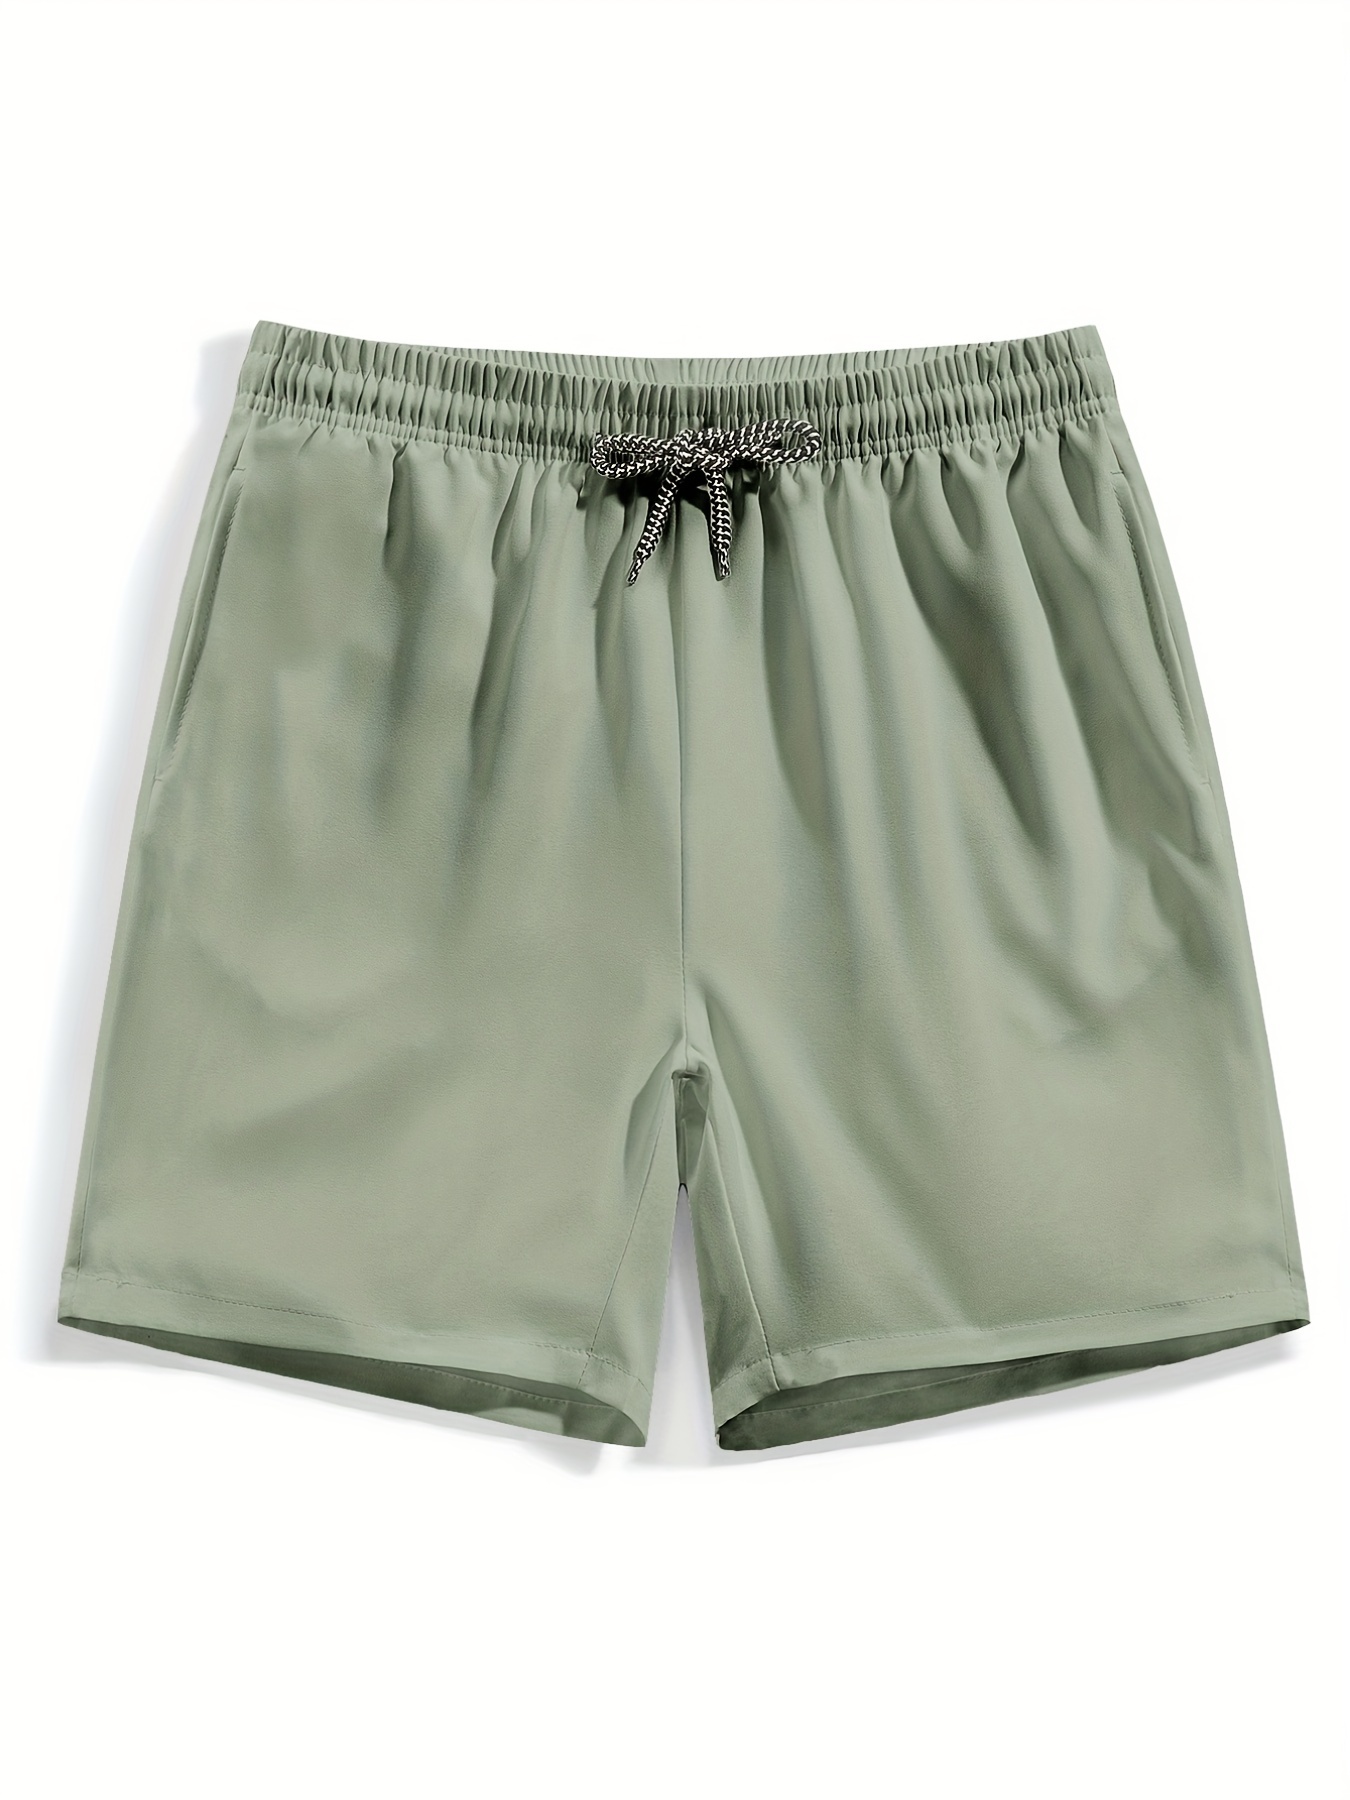 Comfort Shorts - Pastel Green